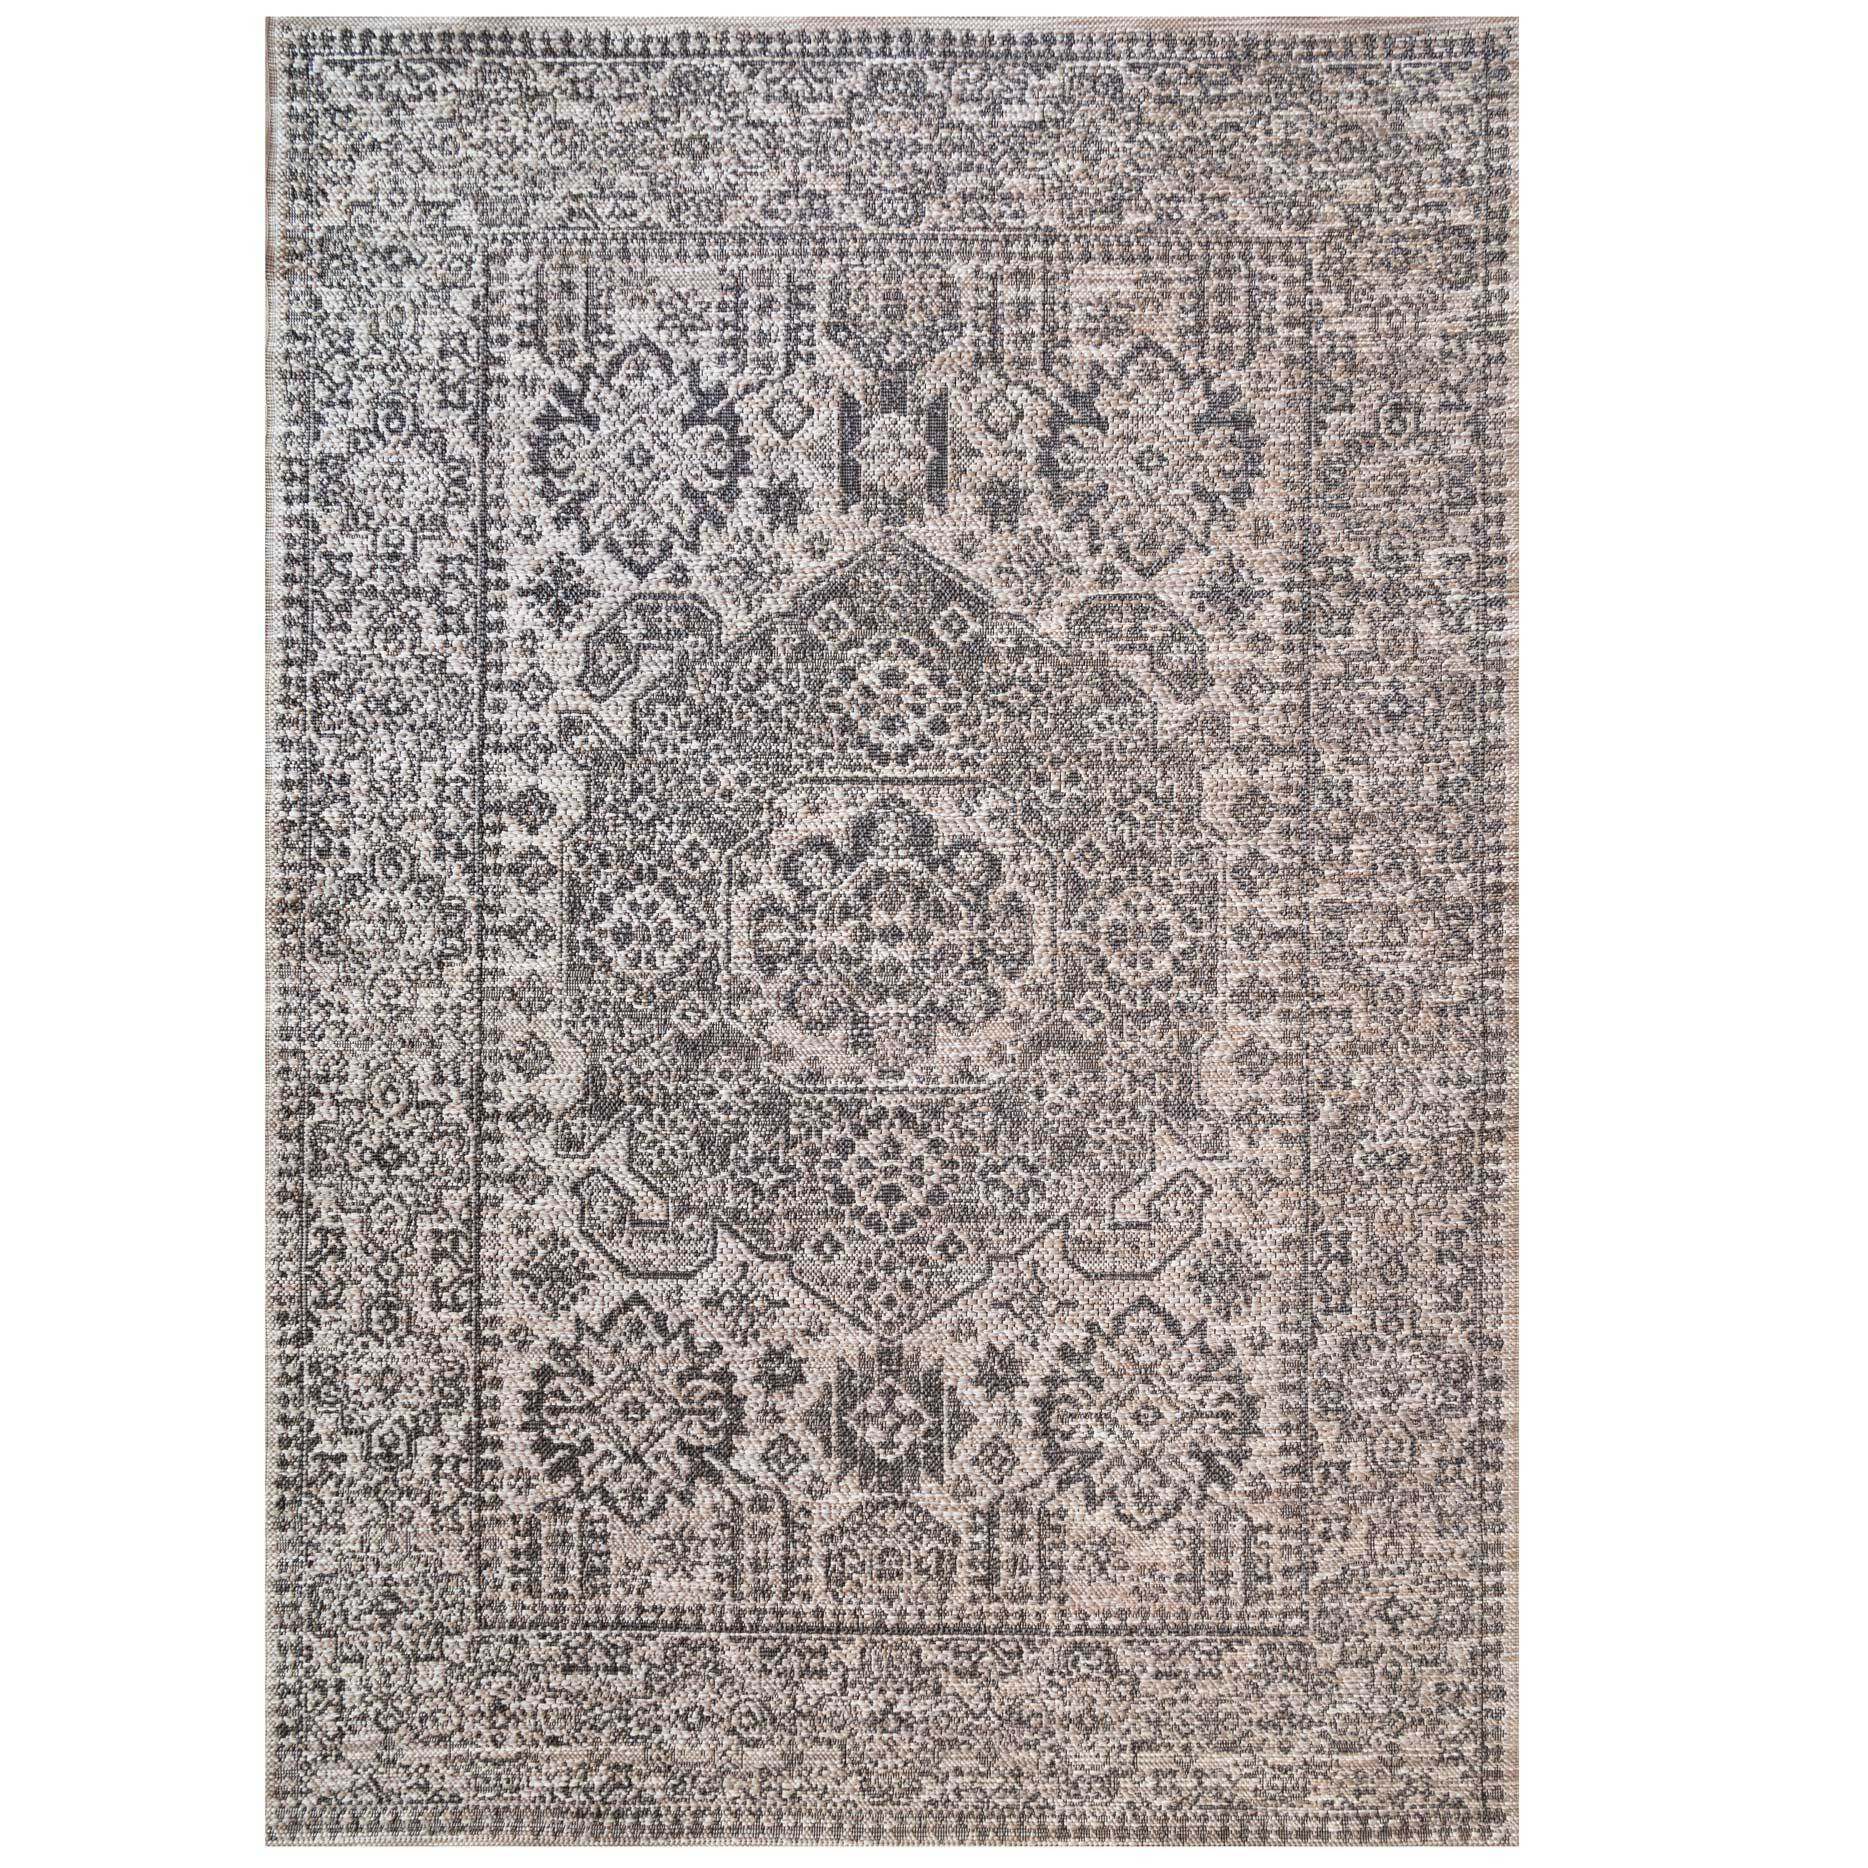 Traditional Textured Flatweave Indoor Outdoor Area Rug - Naylor - Pavillion - 60cm x 110cm